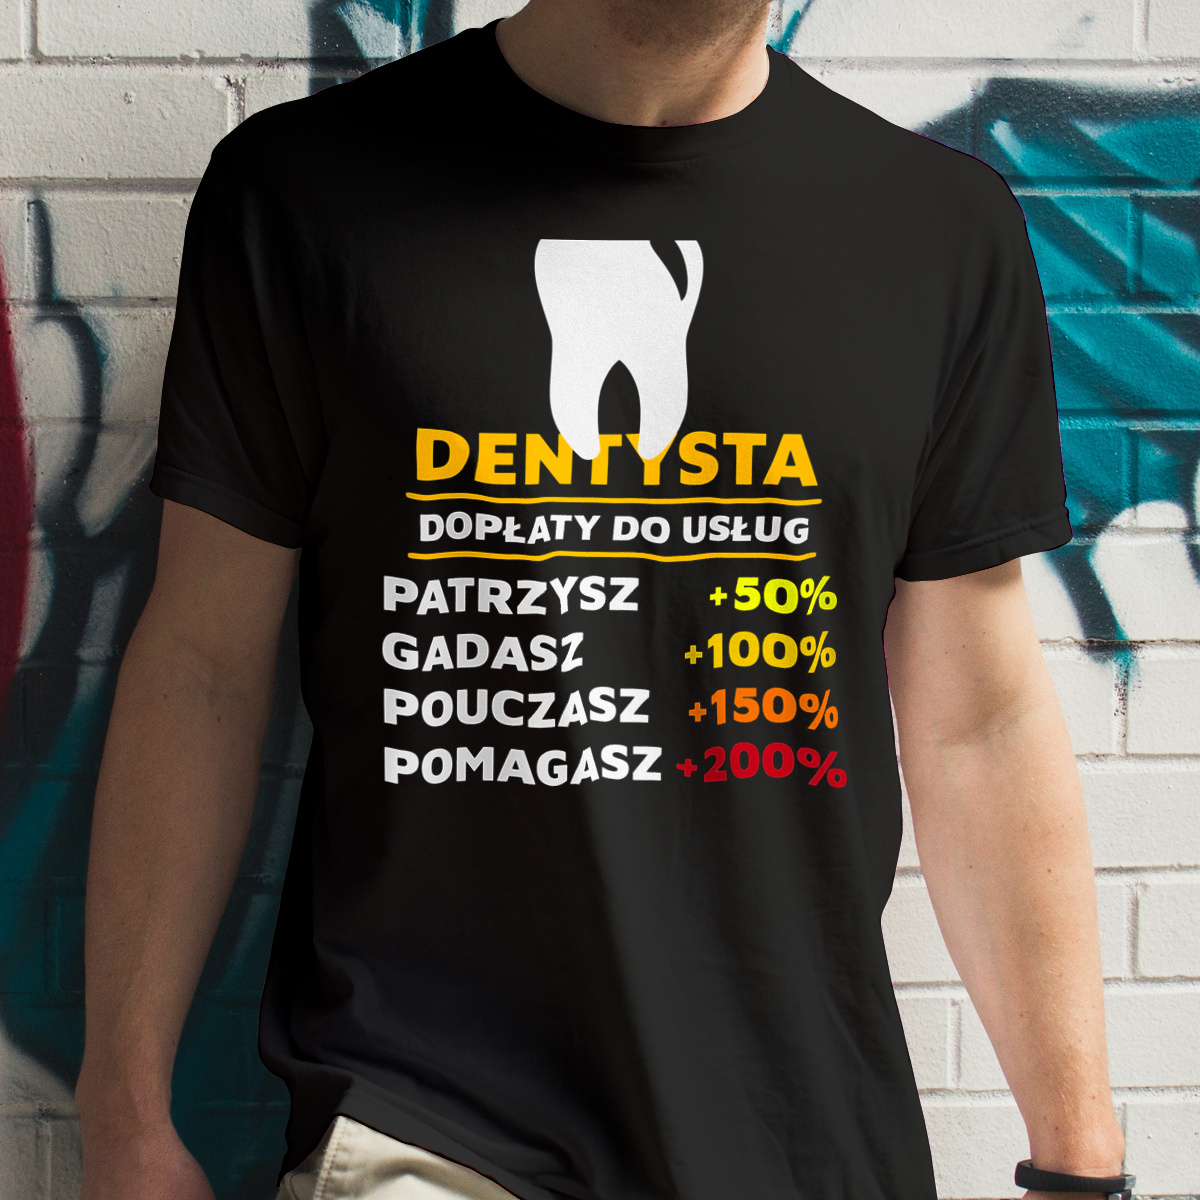 Dopłaty Do Usług Dentysta - Męska Koszulka Czarna